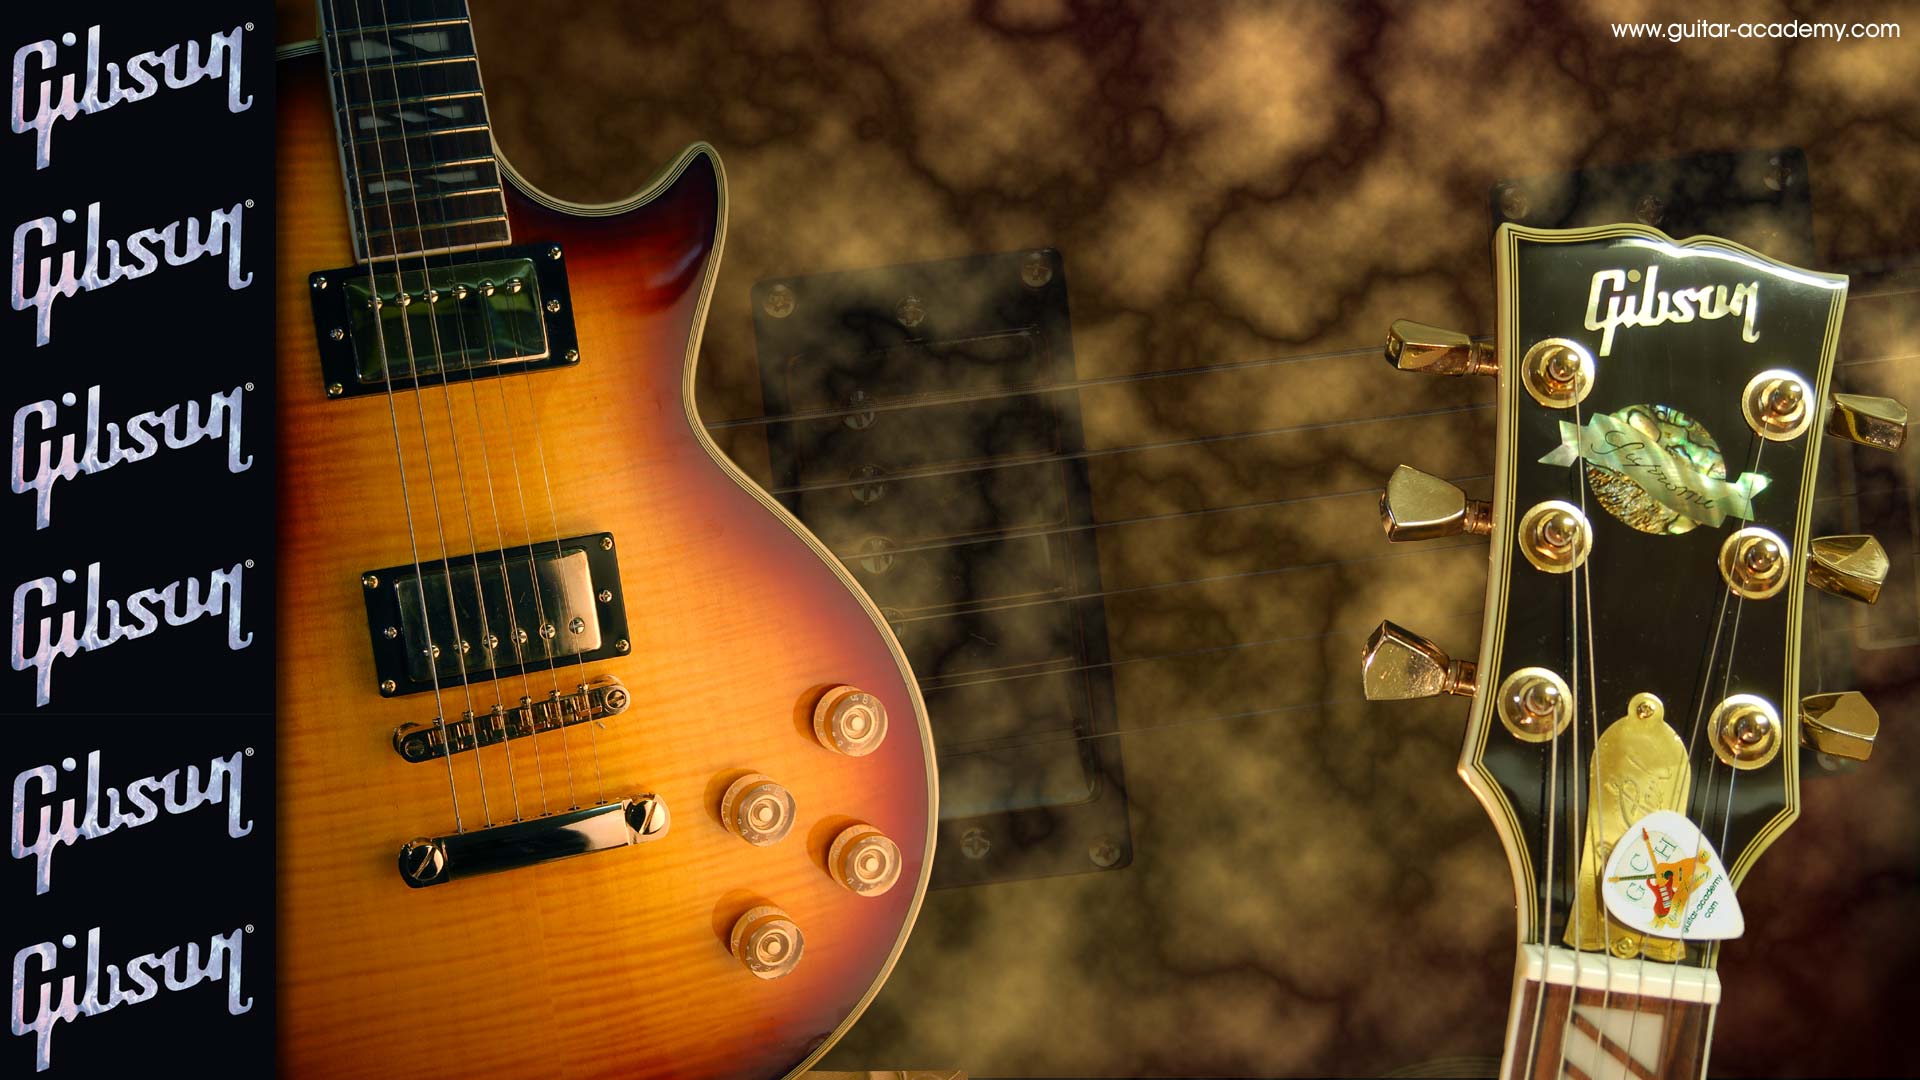 Gibson Les Paul guitar